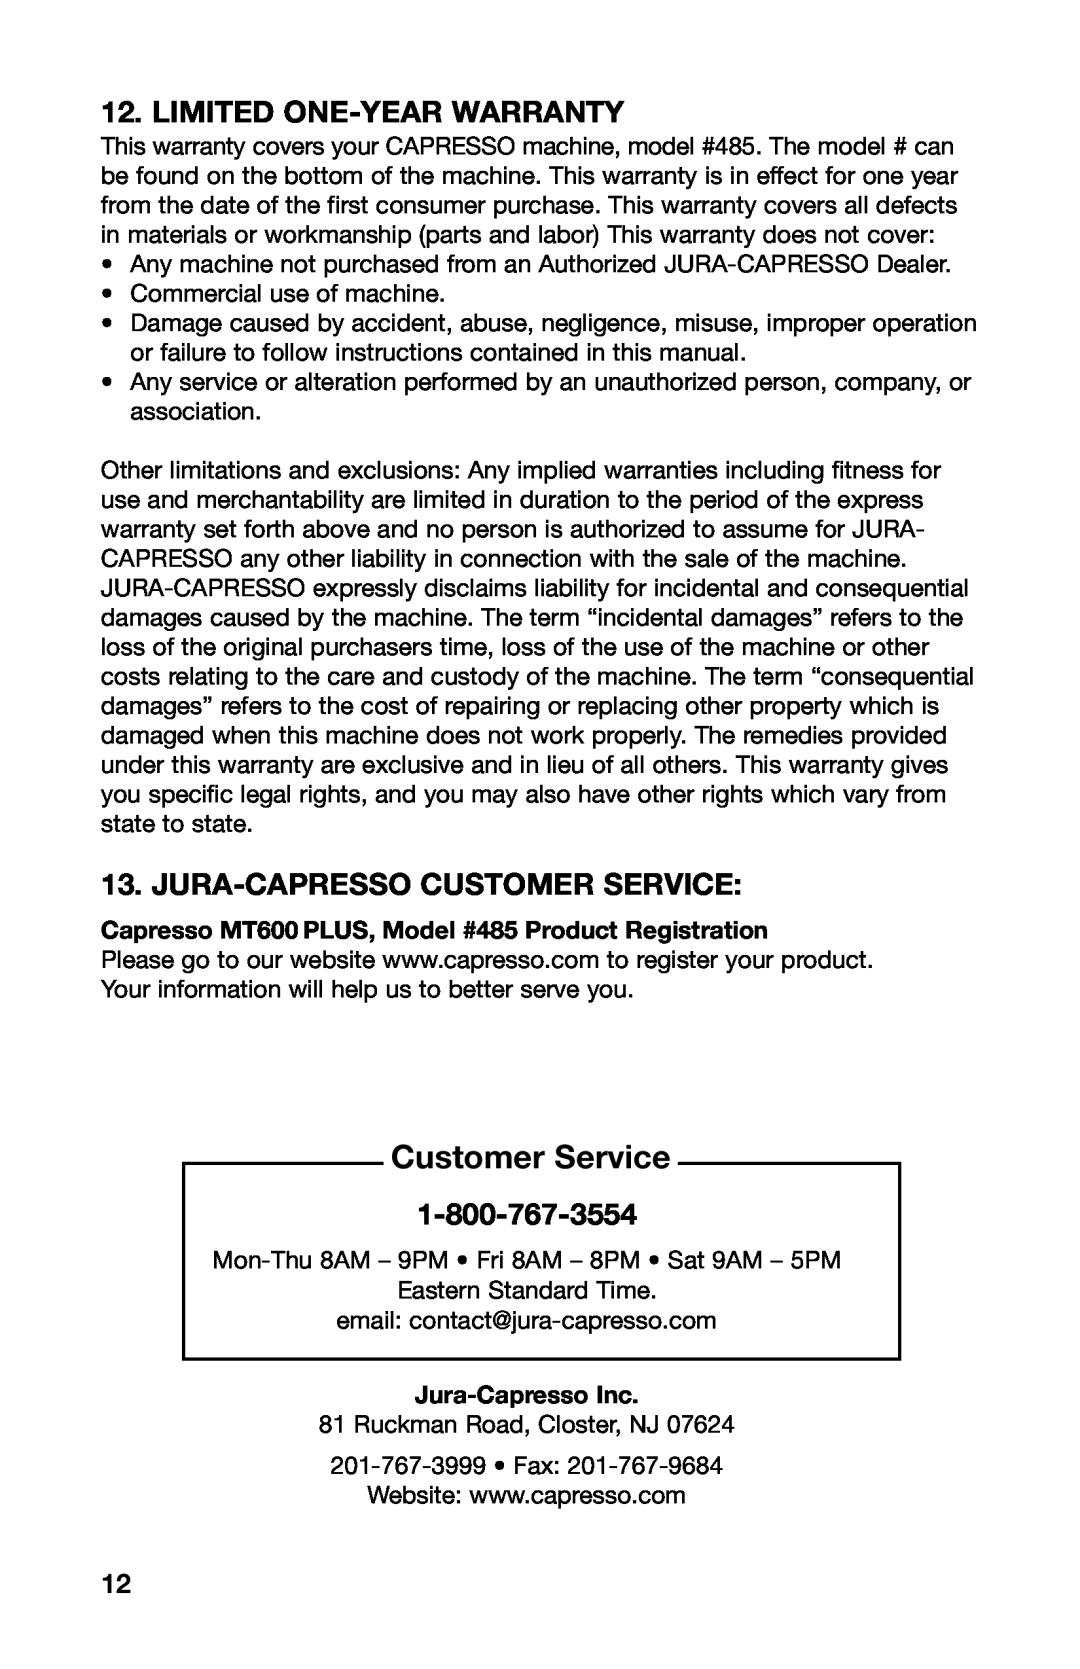 Capresso 485 Customer Service, Limited One-Yearwarranty, Jura-Capressocustomer Service, Jura-CapressoInc 